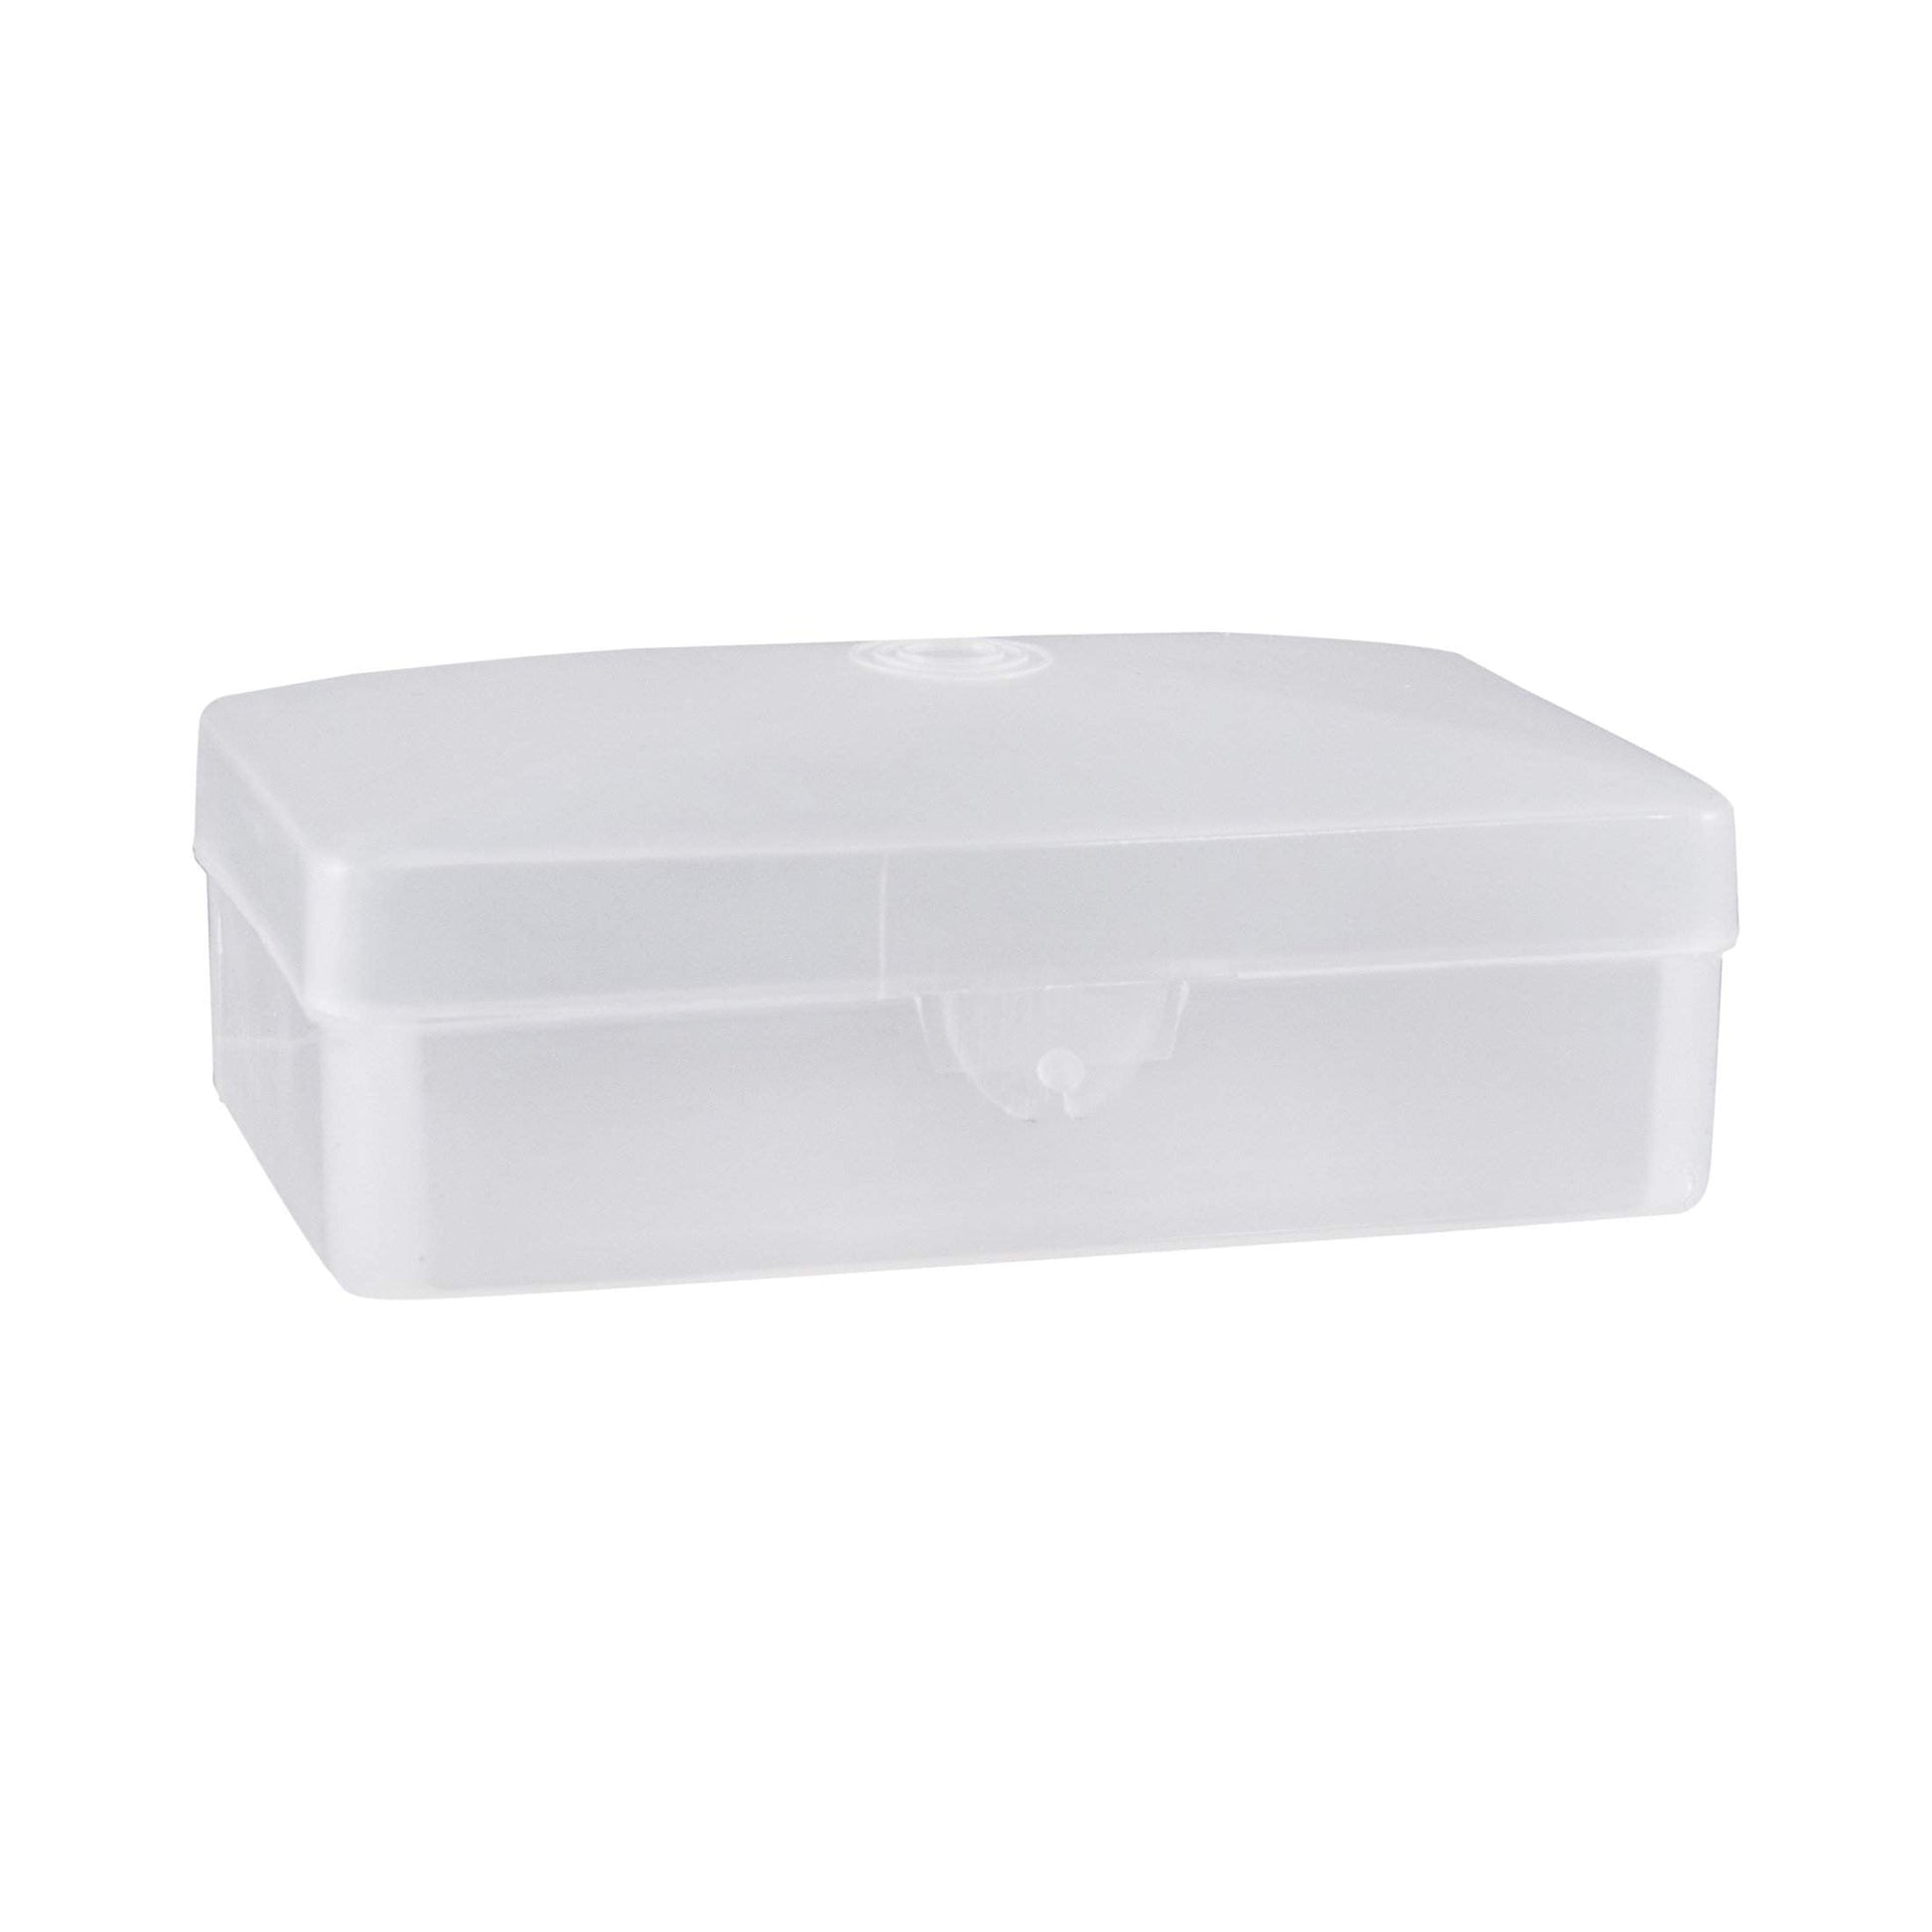 Dukal SB01C Dawn Mist Translucent Plastic Soap Box 2 1/2" x 3.14" (Pack of 100) (FULL CASE!)-Dukal-Brand_Dukal/ Dawn Mist,Collection_Lifestyle,Dukal_Bath & Body,Life_Personal Care